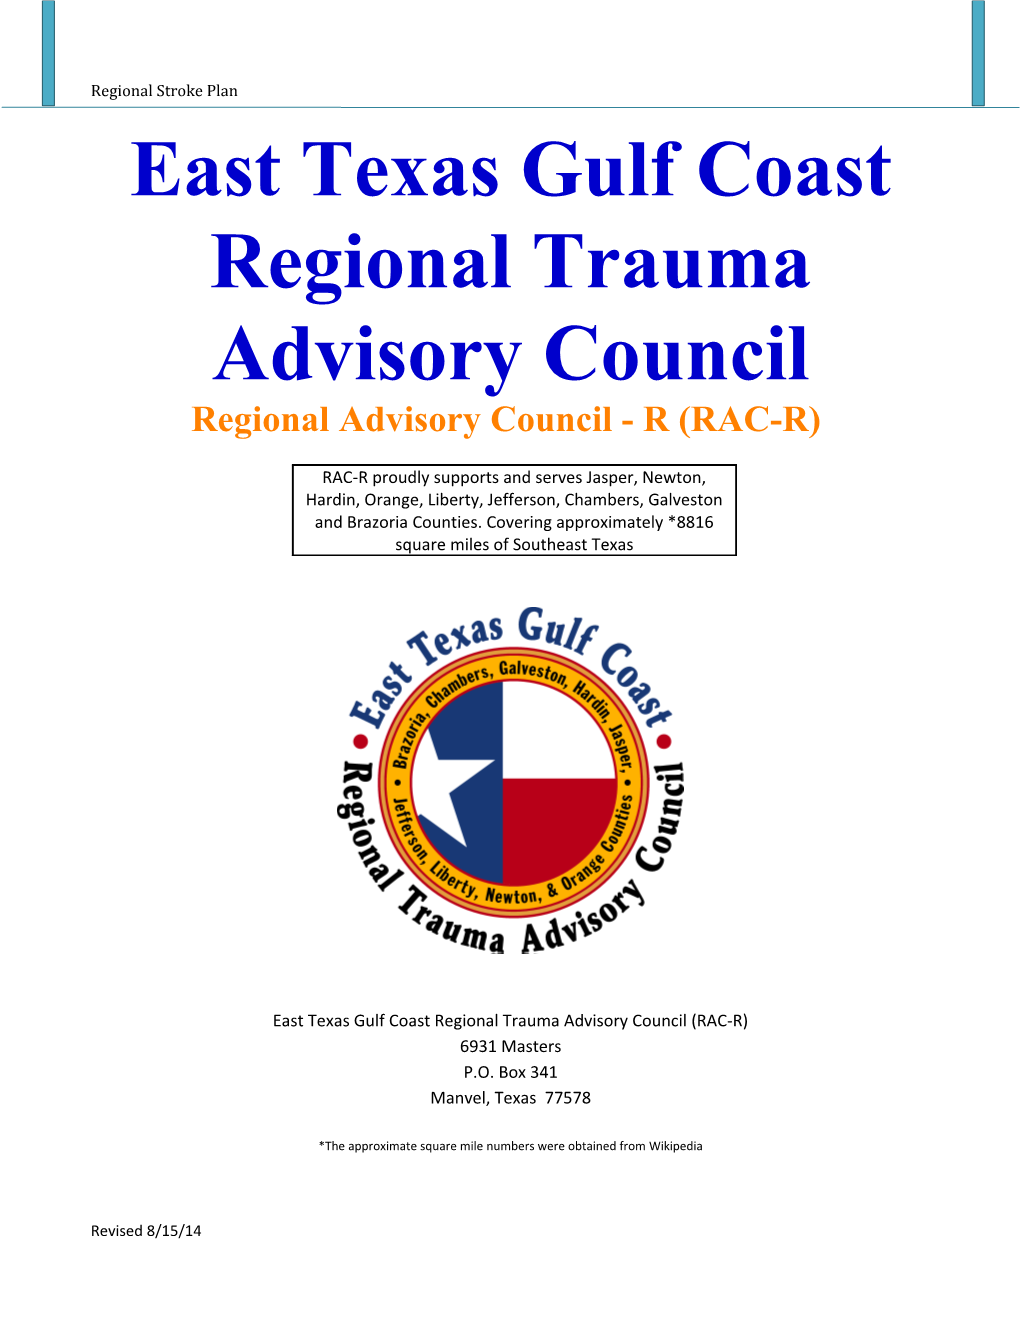 East Texas Gulf Coast Regional Trauma Advisory Council Regional Advisory Council - R (RAC-R)